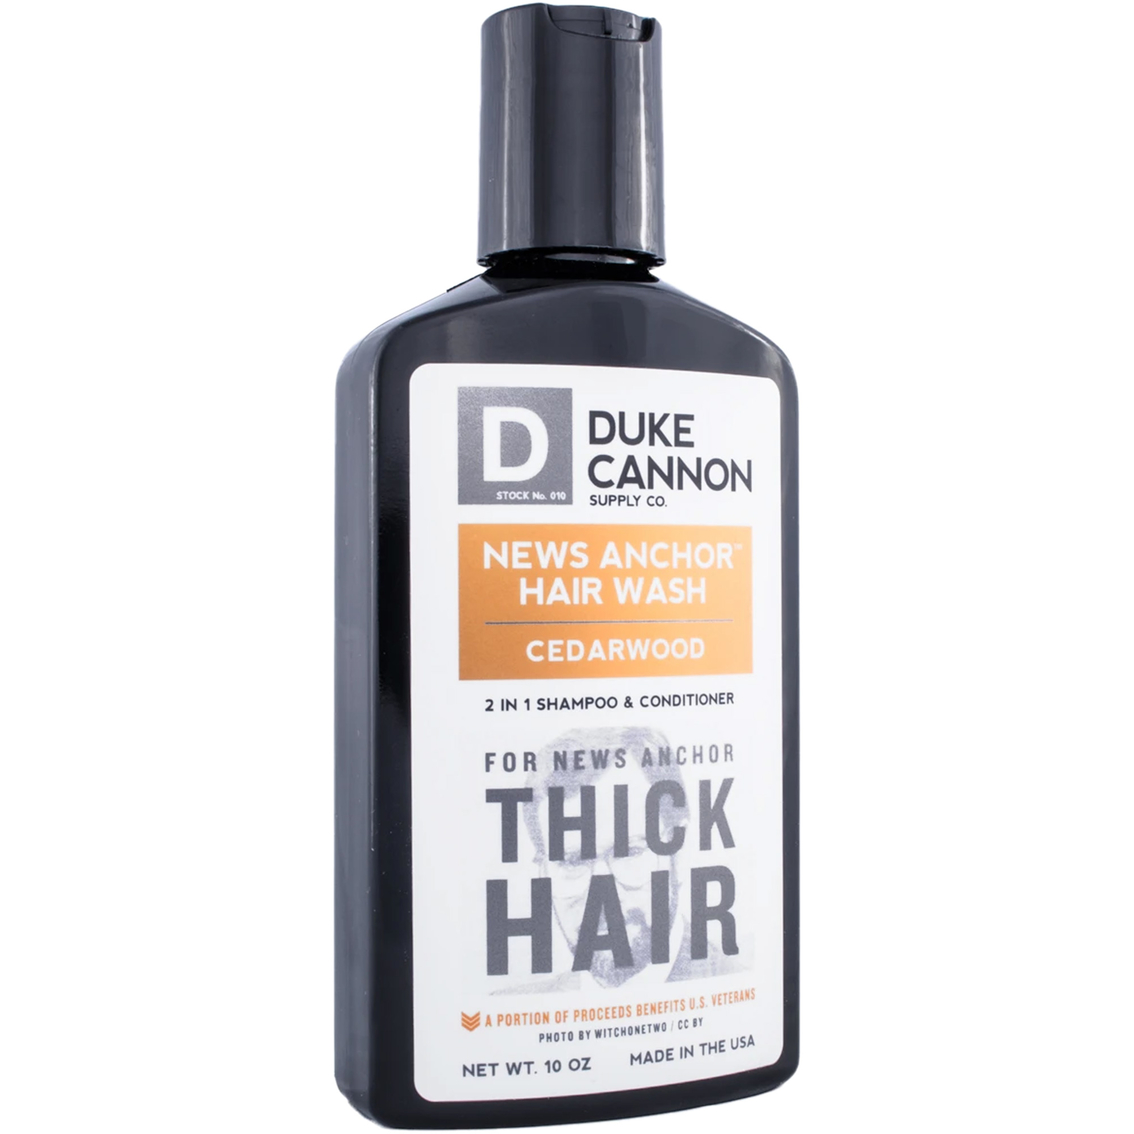 Duke Cannon News Anchor 2-in-1 Cedarwood Hair Wash - Image 3 of 3